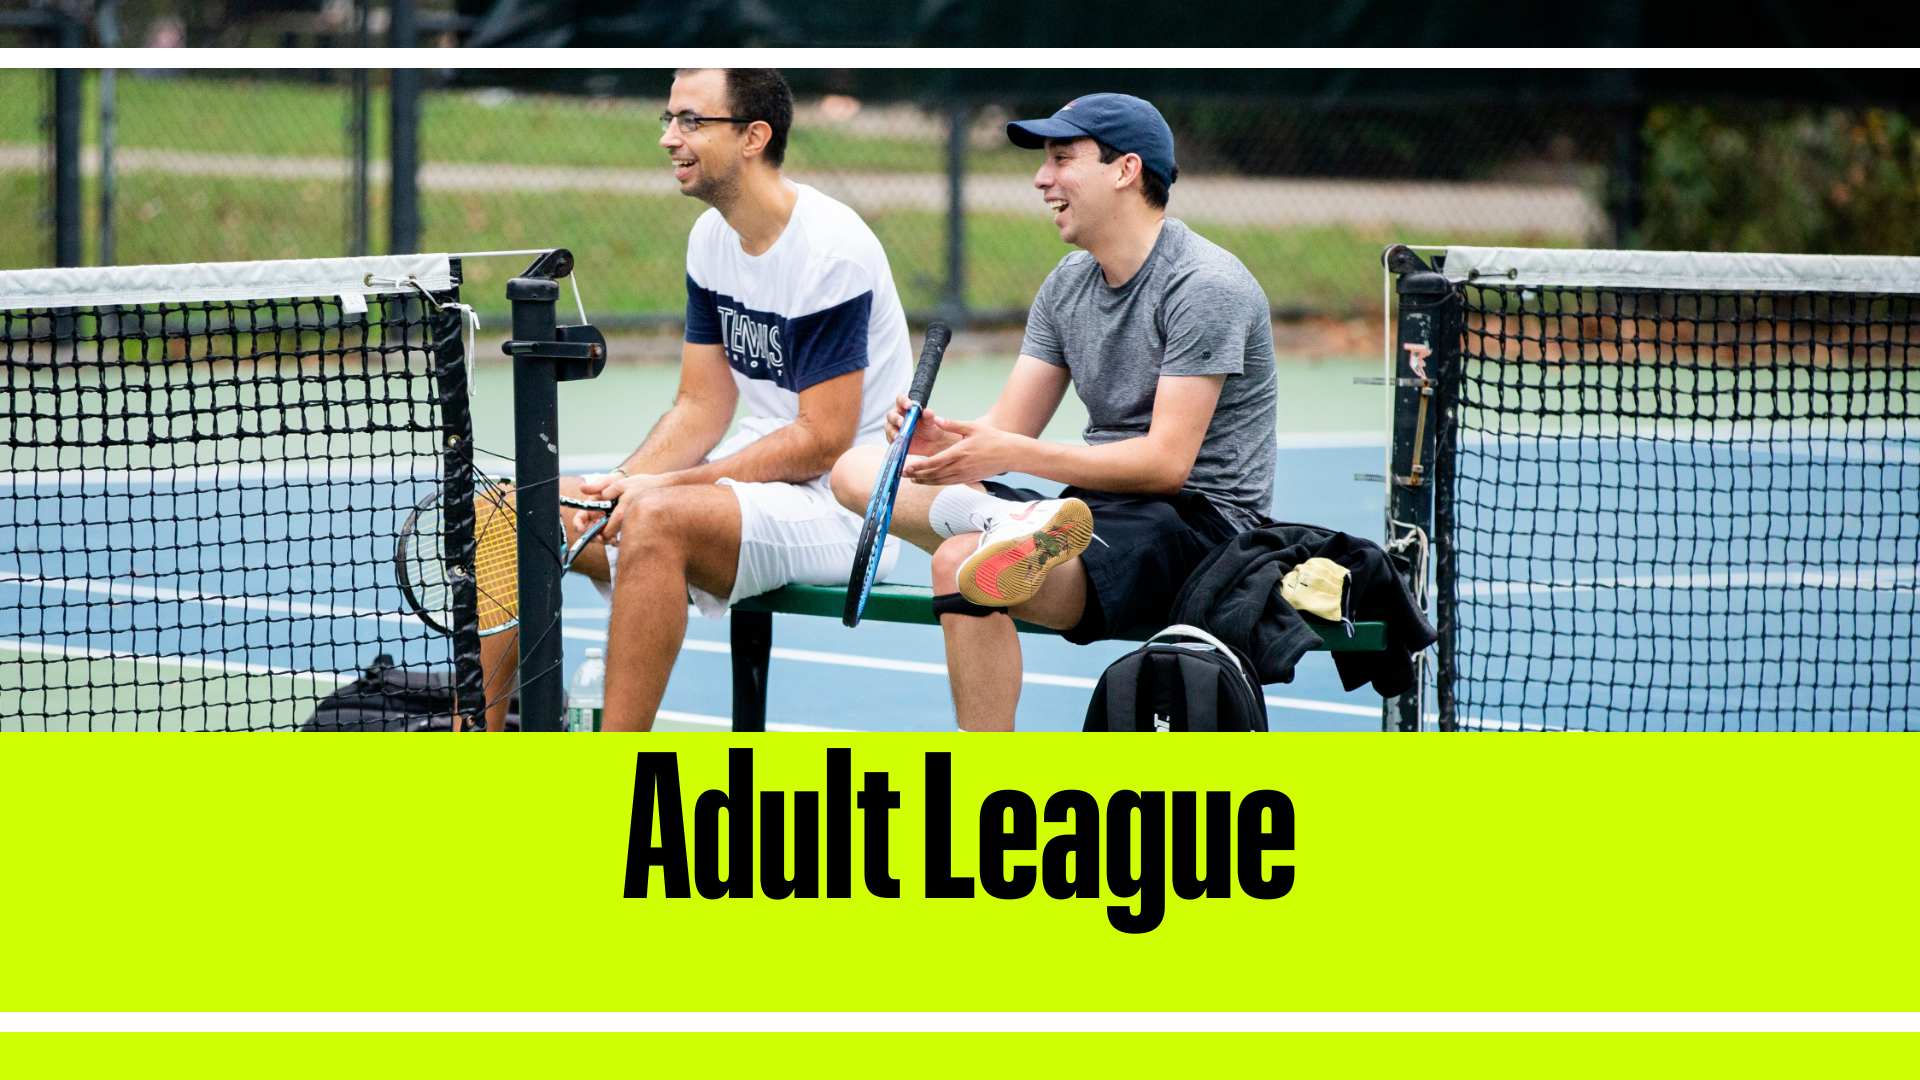 adult league cover photo